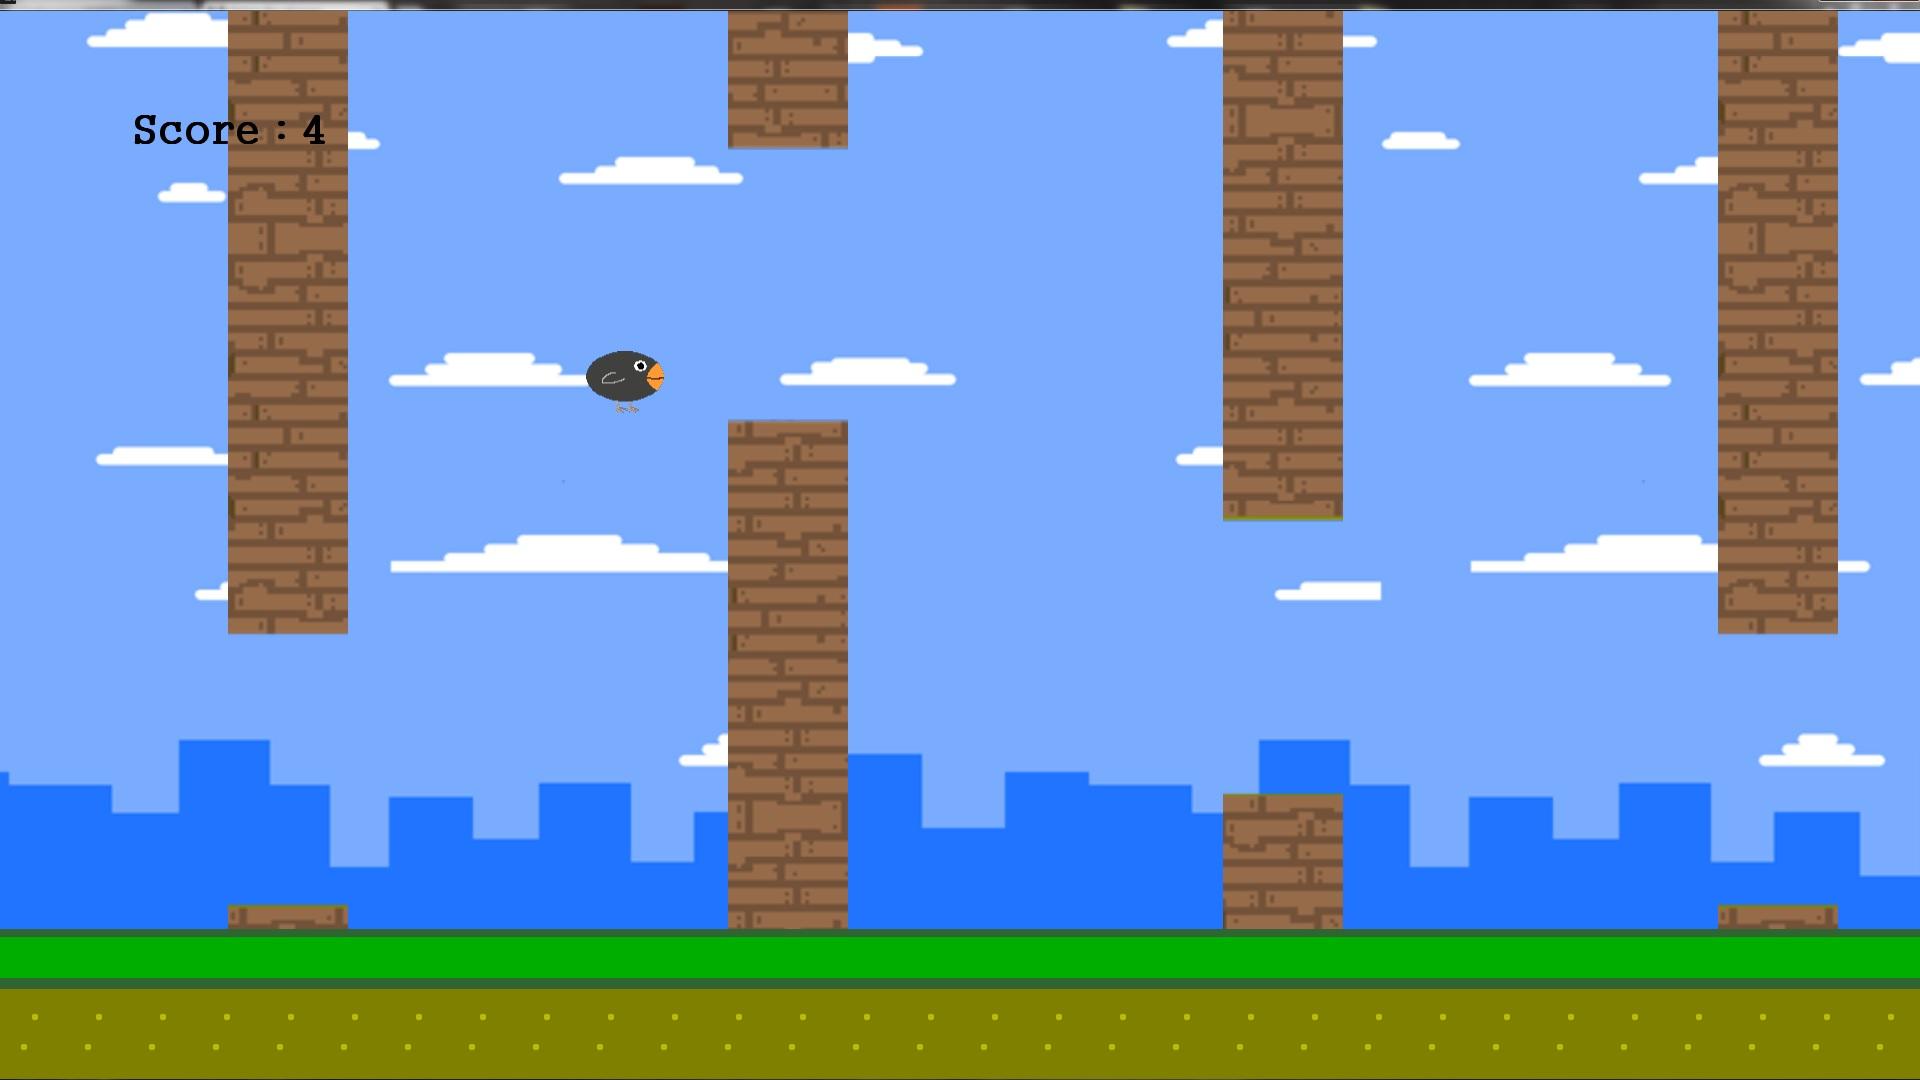 Screenshot of Flappy Crow